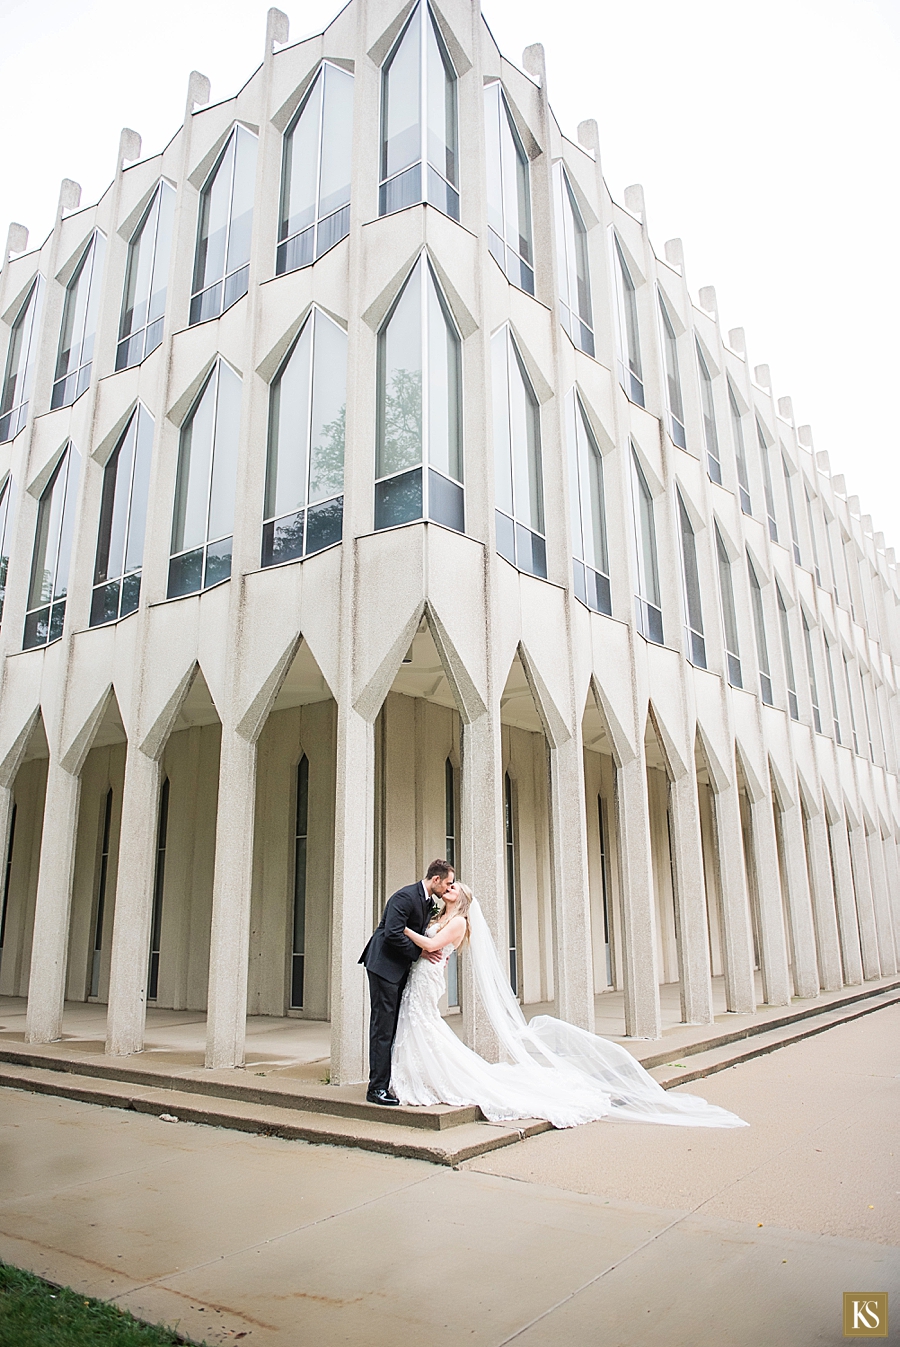 Wayne State University Campus wedding photos